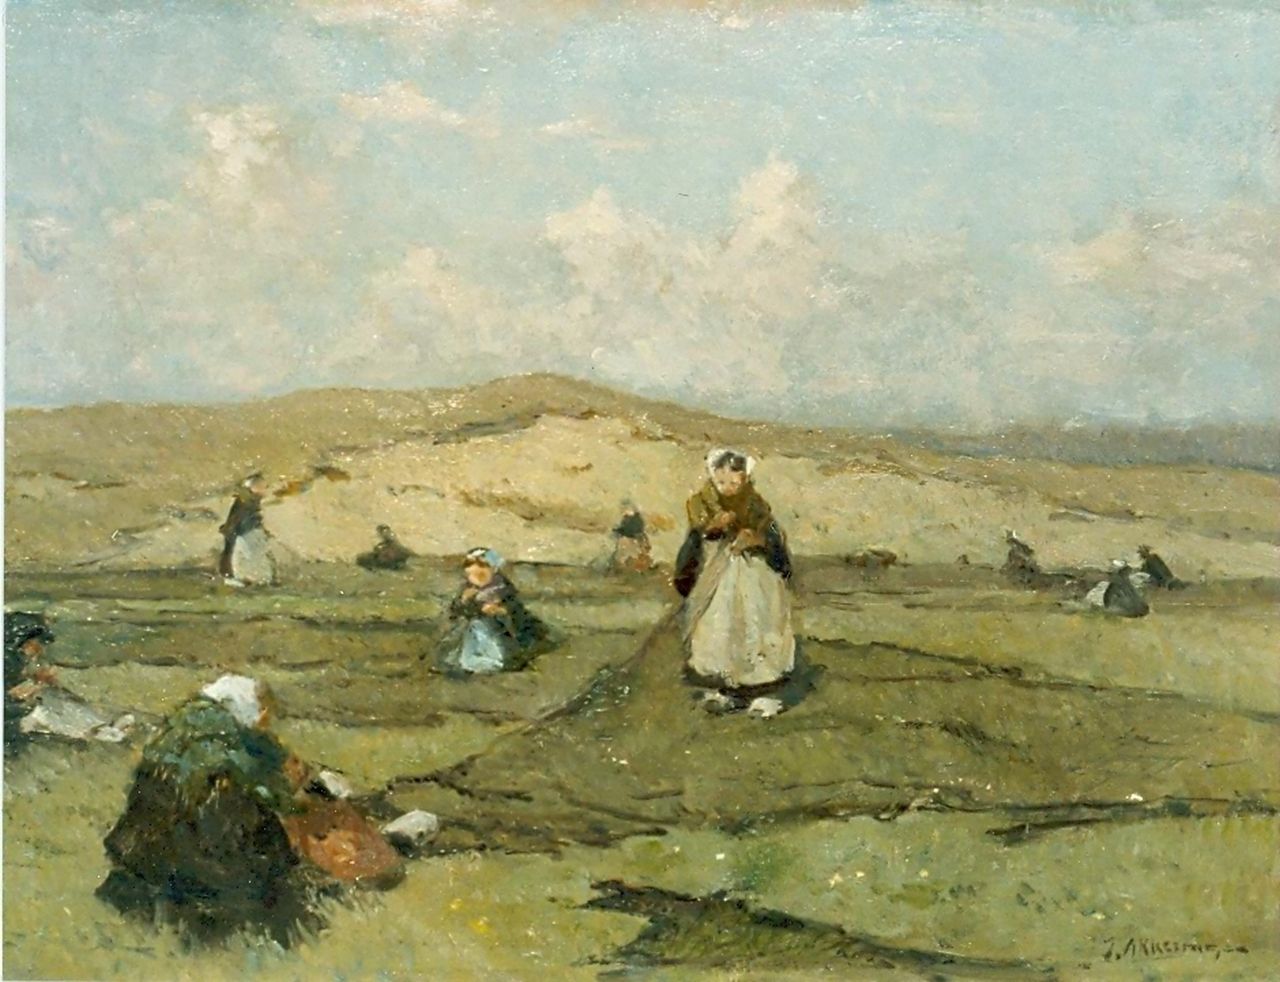 Akkeringa J.E.H.  | 'Johannes Evert' Hendrik Akkeringa, Mending the nets in the dunes, Öl auf Leinwand 33,0 x 45,0 cm, signed l.r.